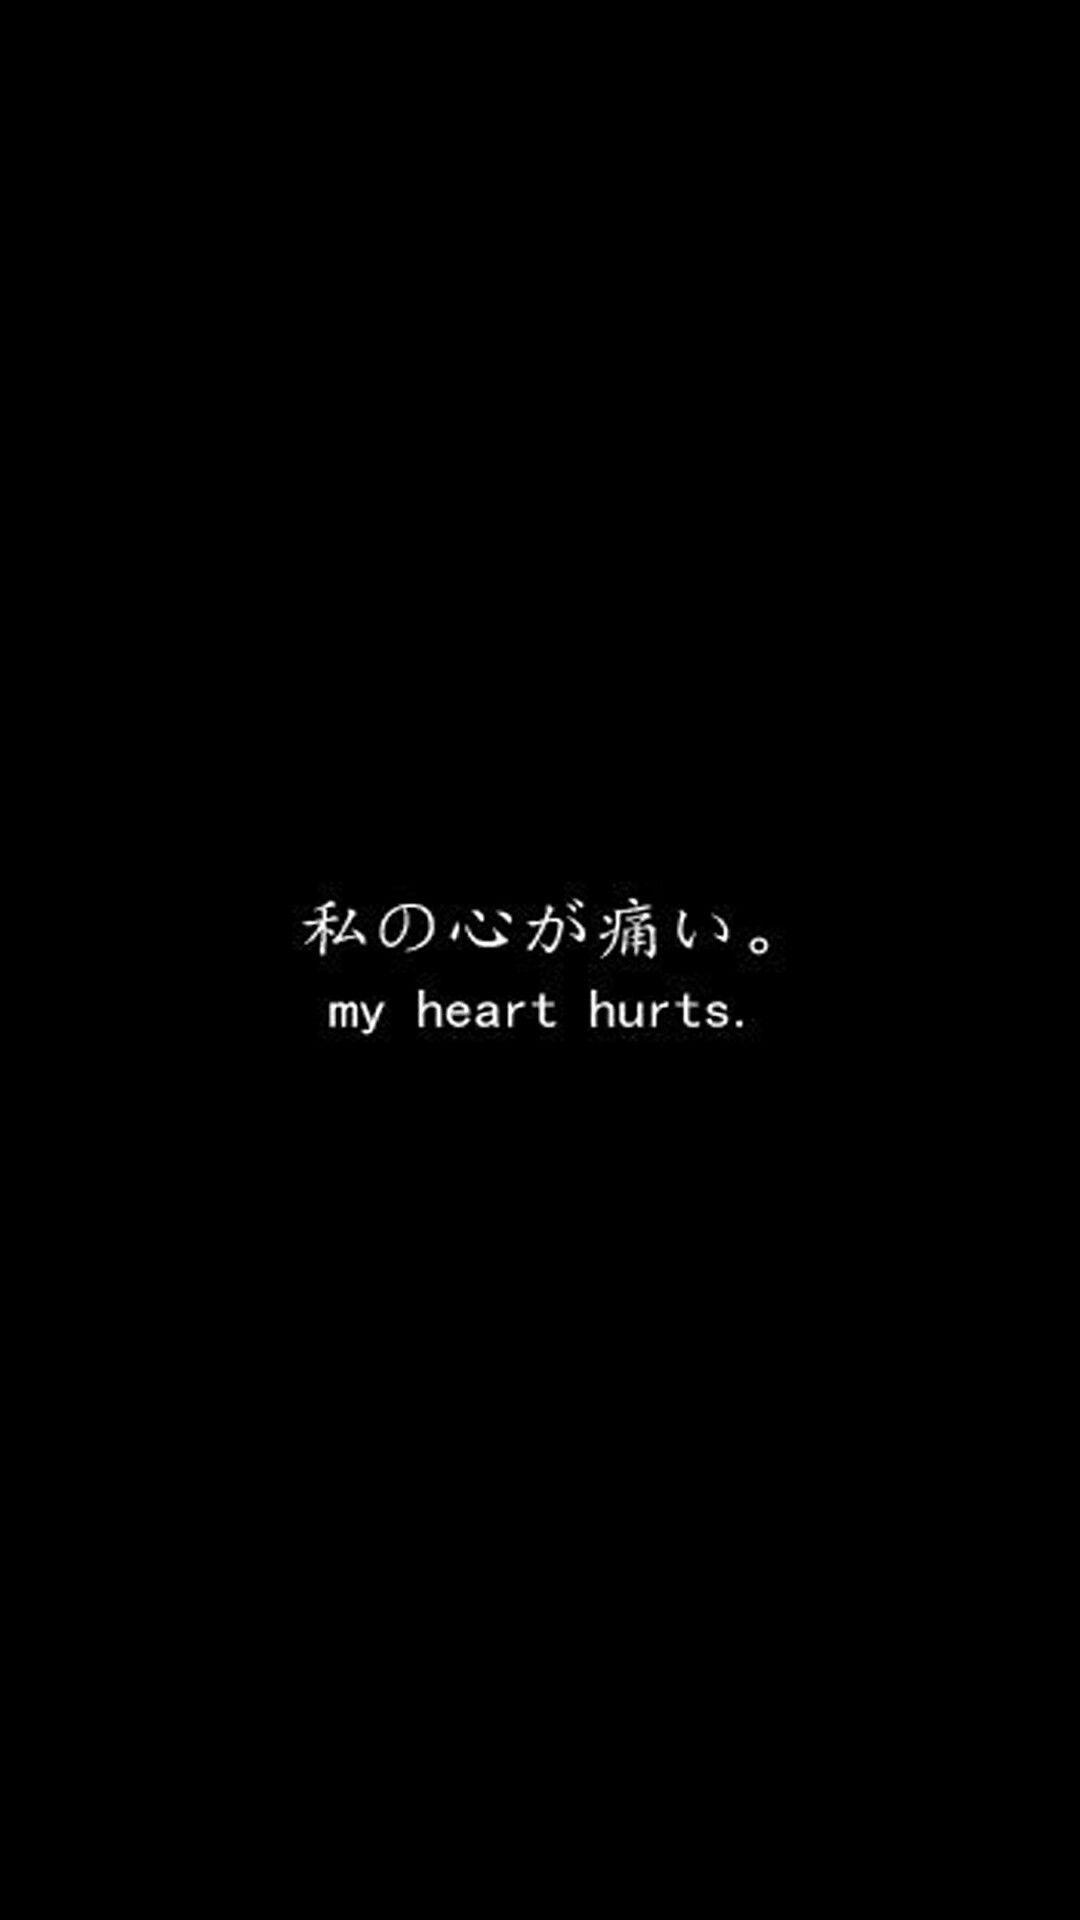 My heart hurts wallpaper - Japanese